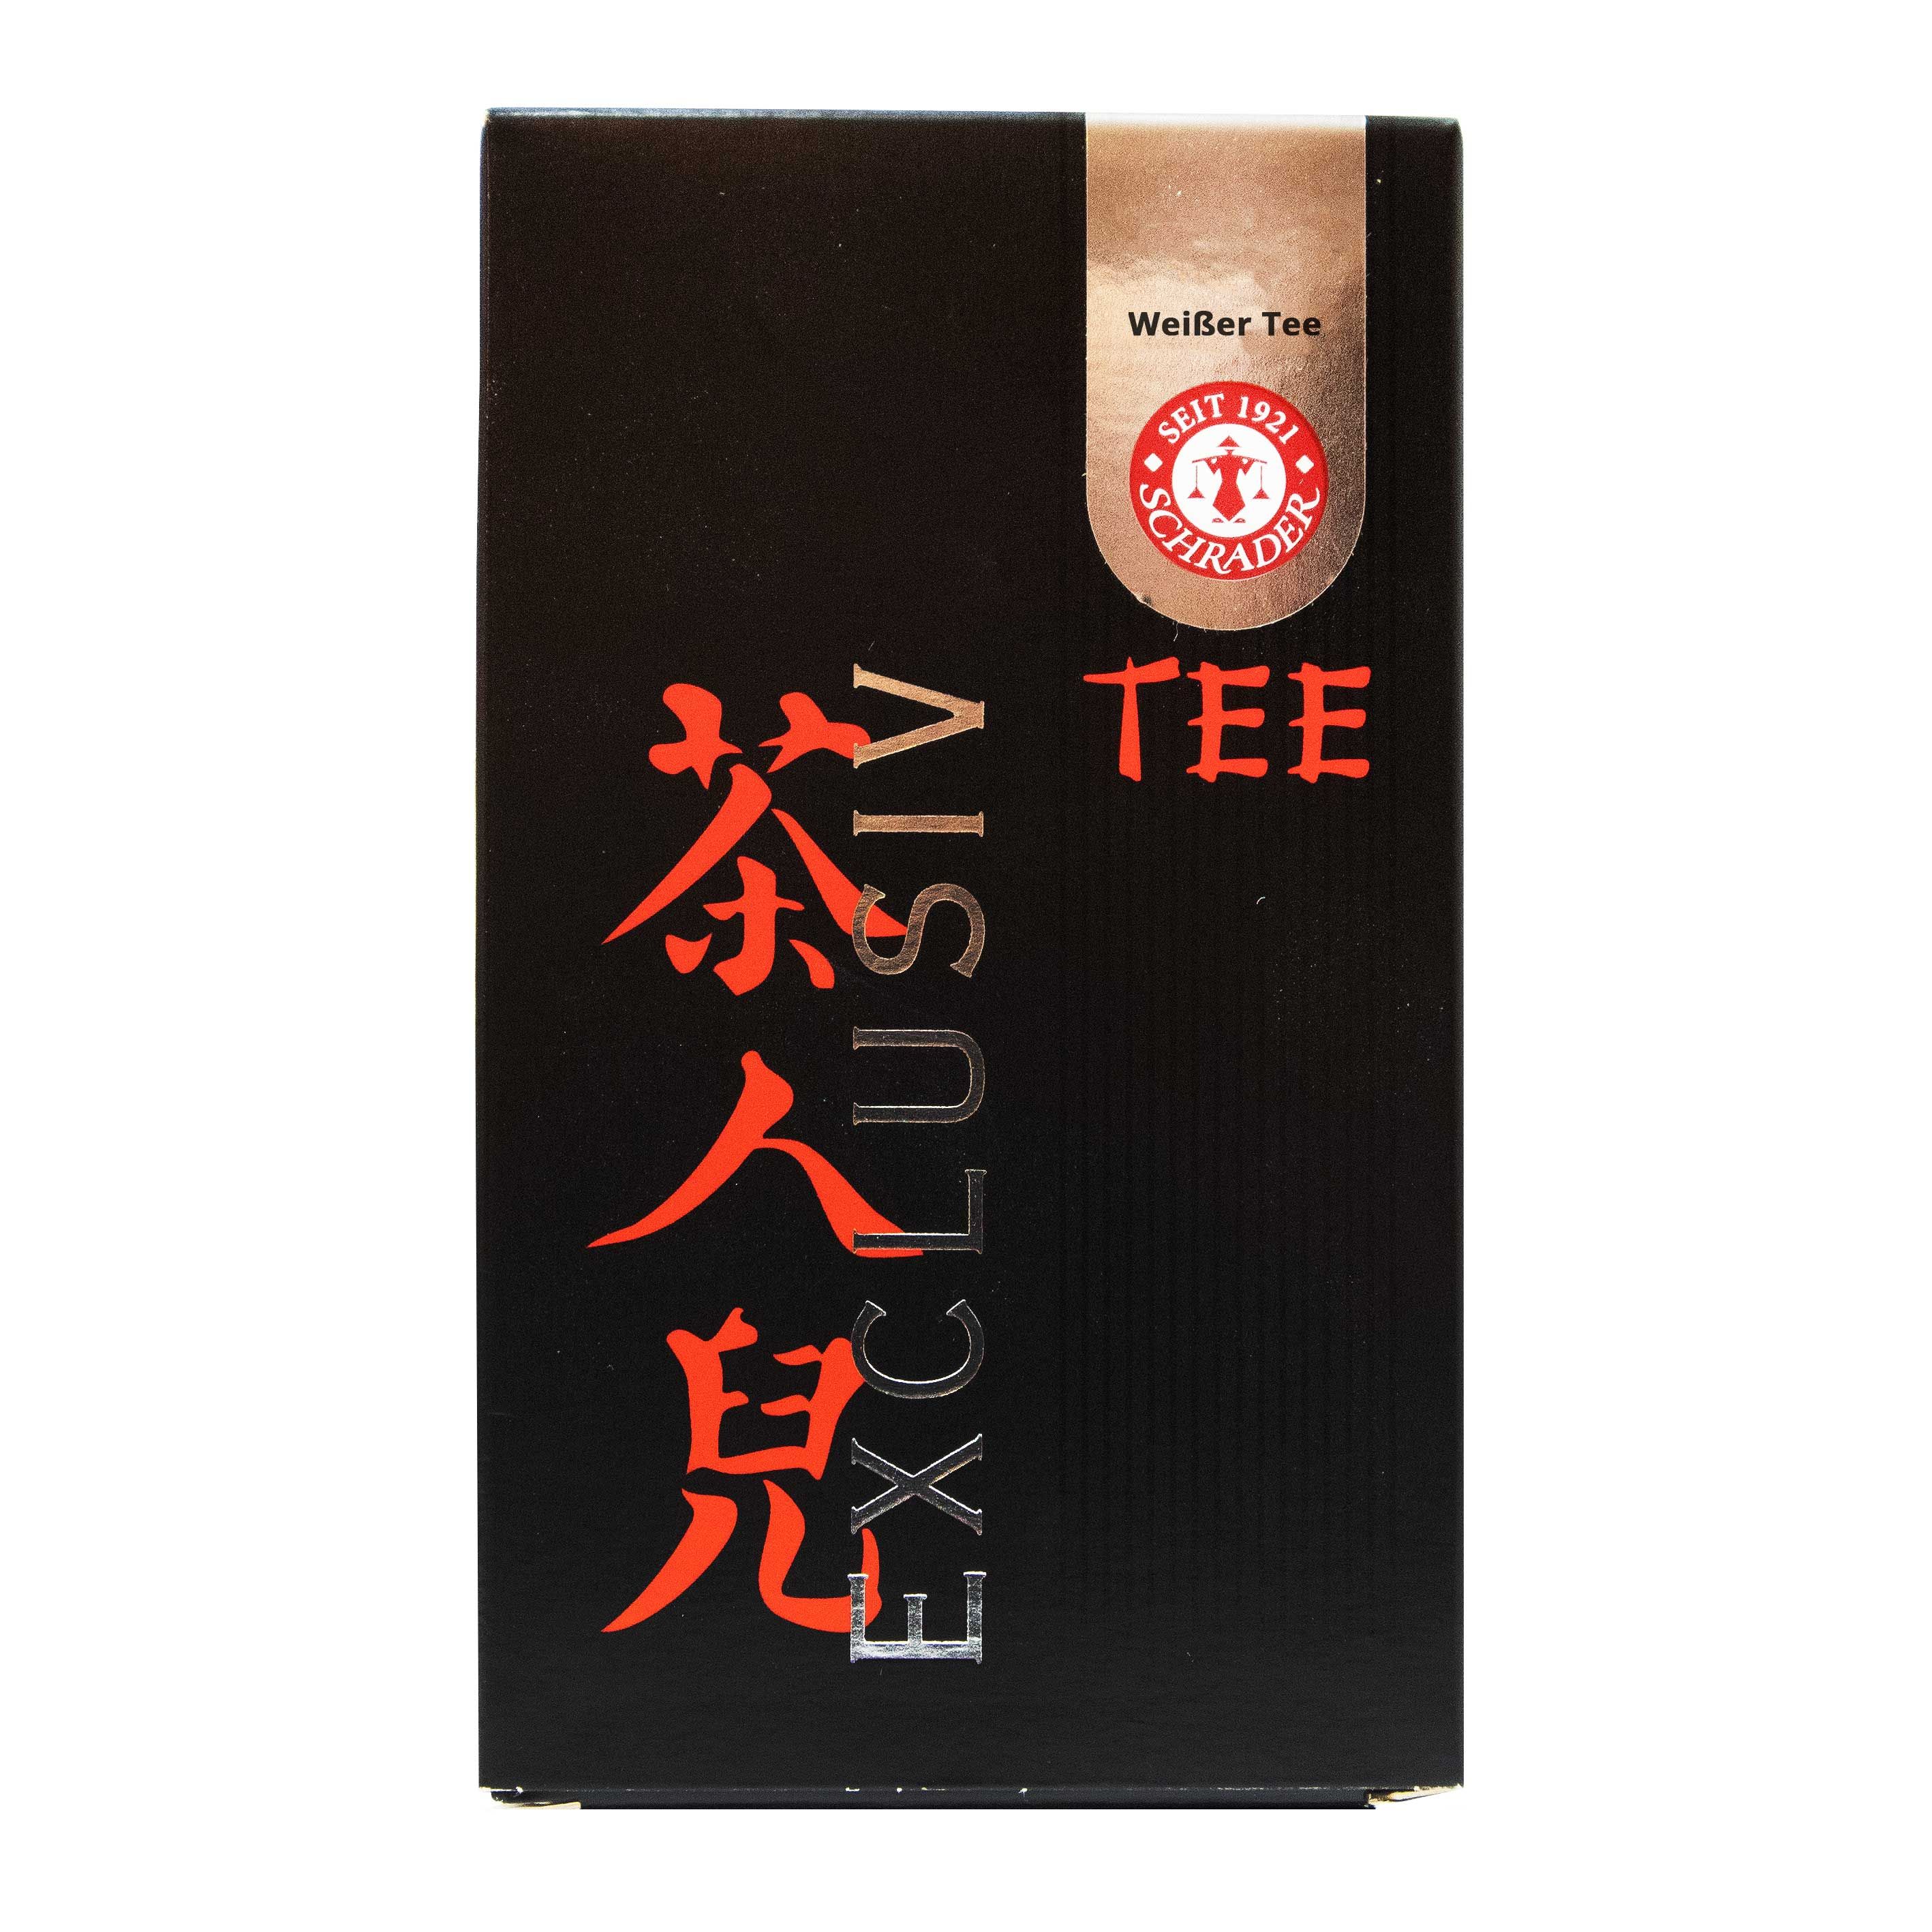 Schrader Weißer Tee China White Monkey-Pekoe